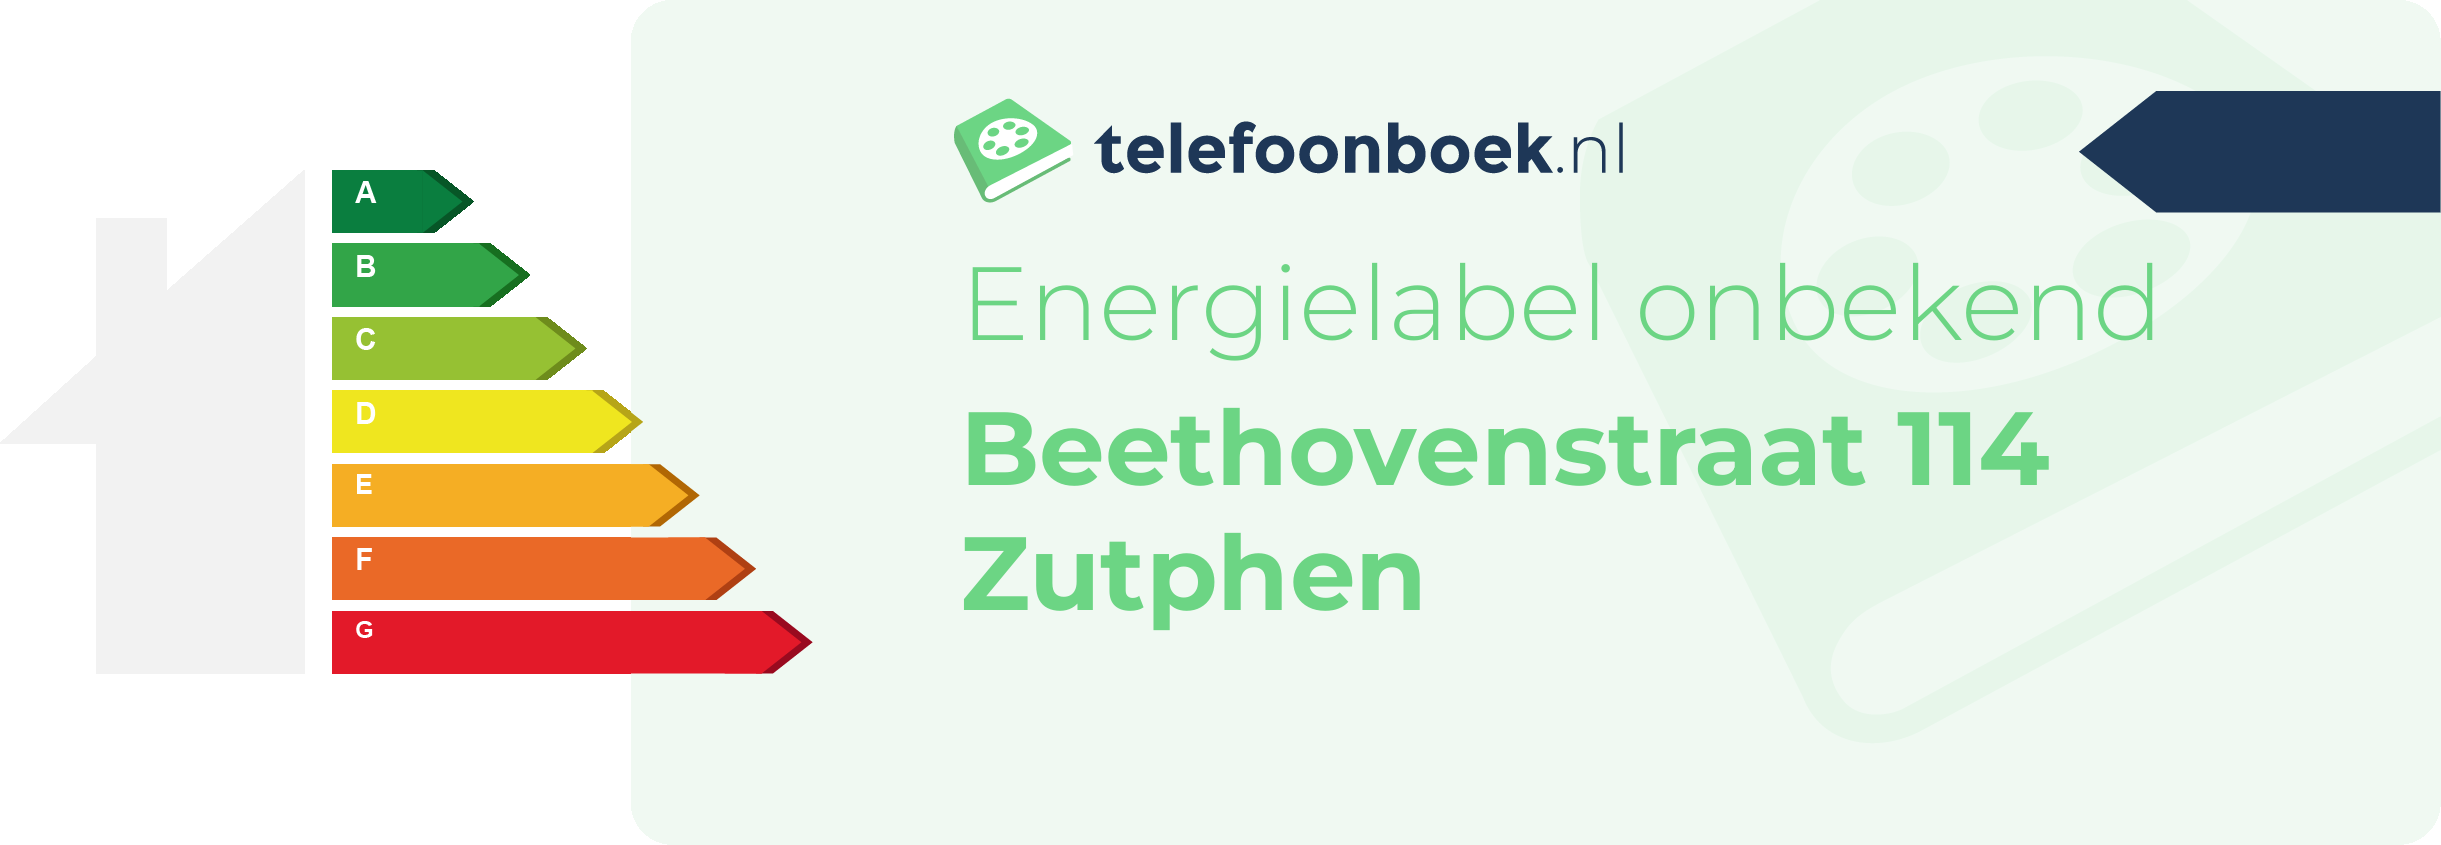 Energielabel Beethovenstraat 114 Zutphen